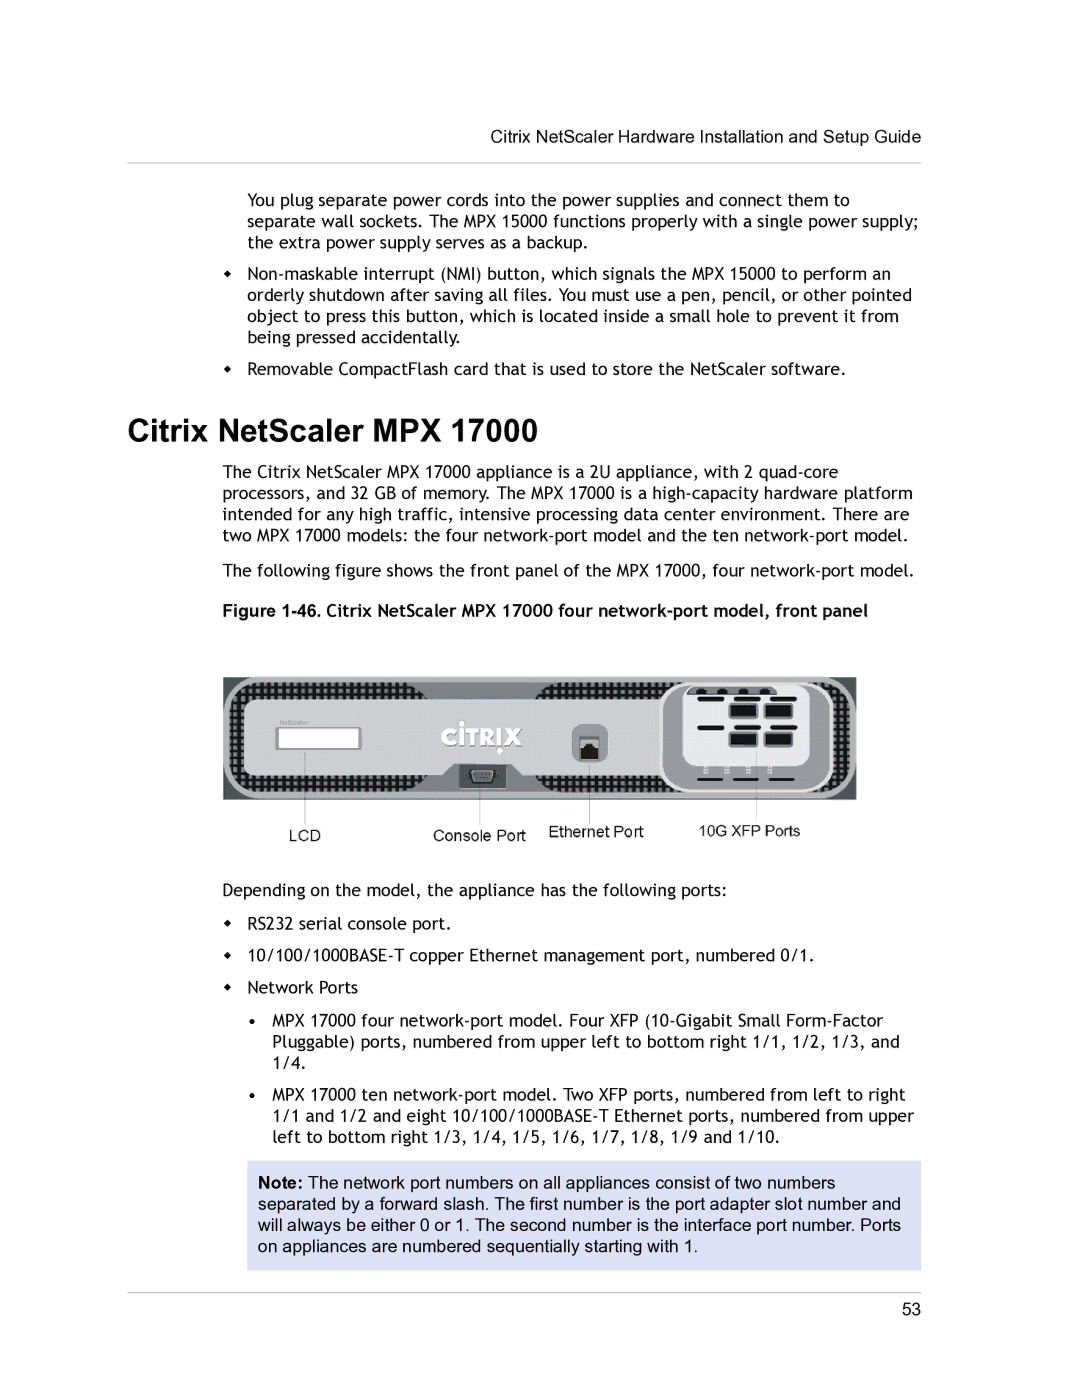 Citrix Systems 9.3 setup guide Citrix NetScaler MPX 